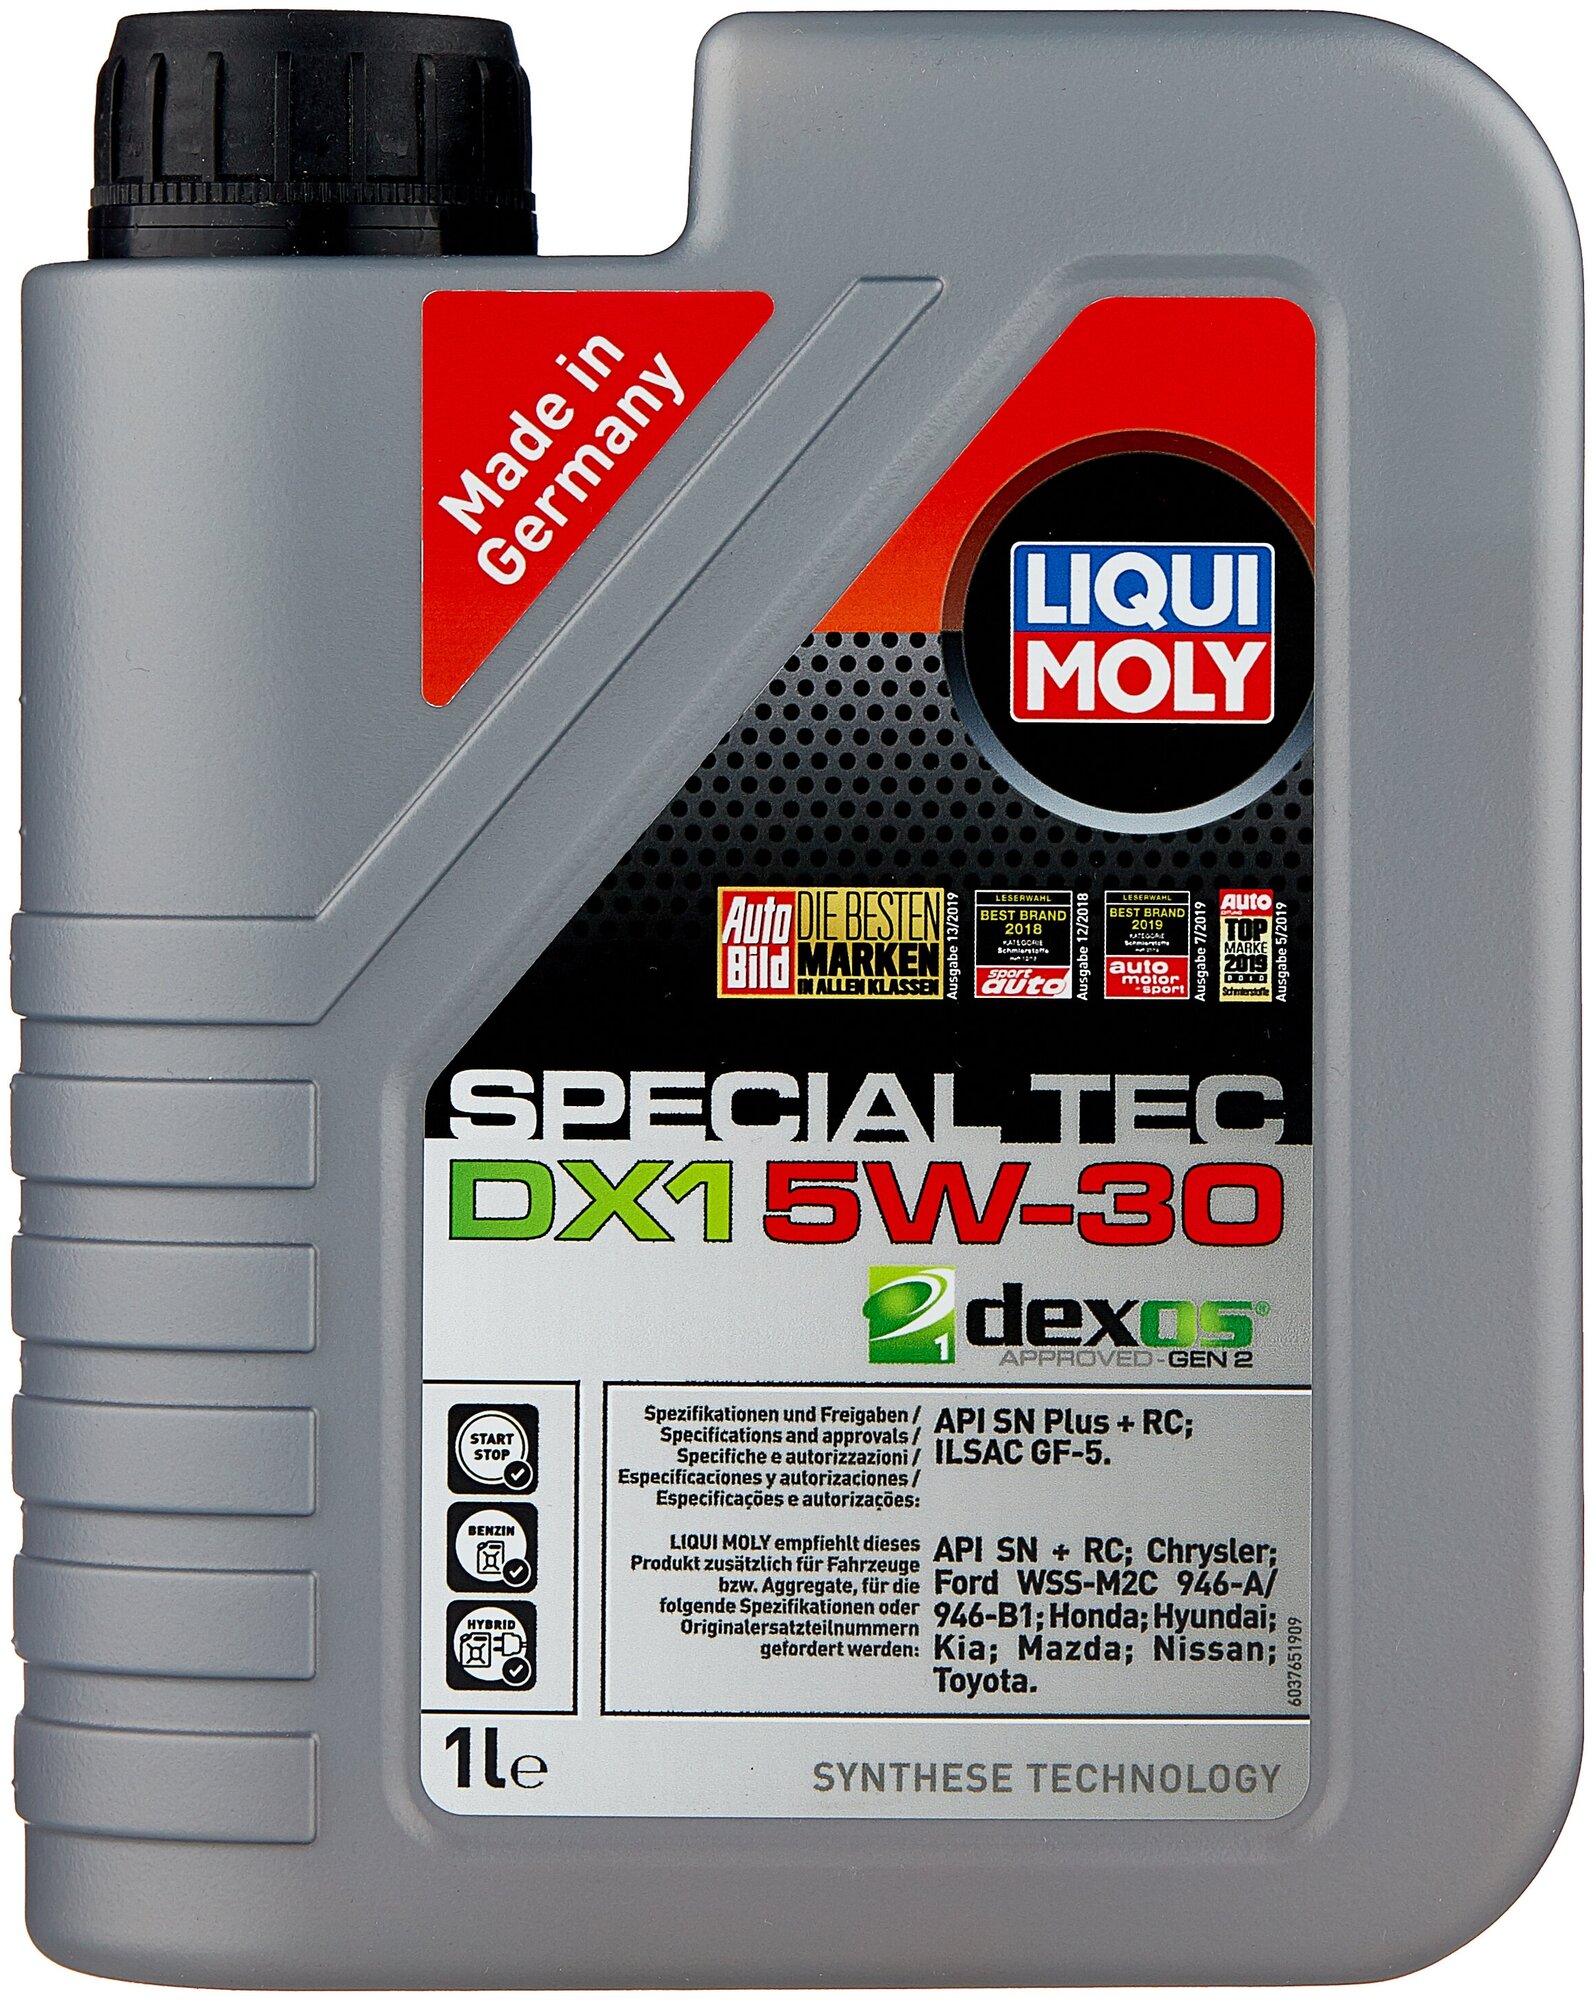 20967 Special Tec DX1 5W-30 - НС-синтетическое моторное масло, 1л